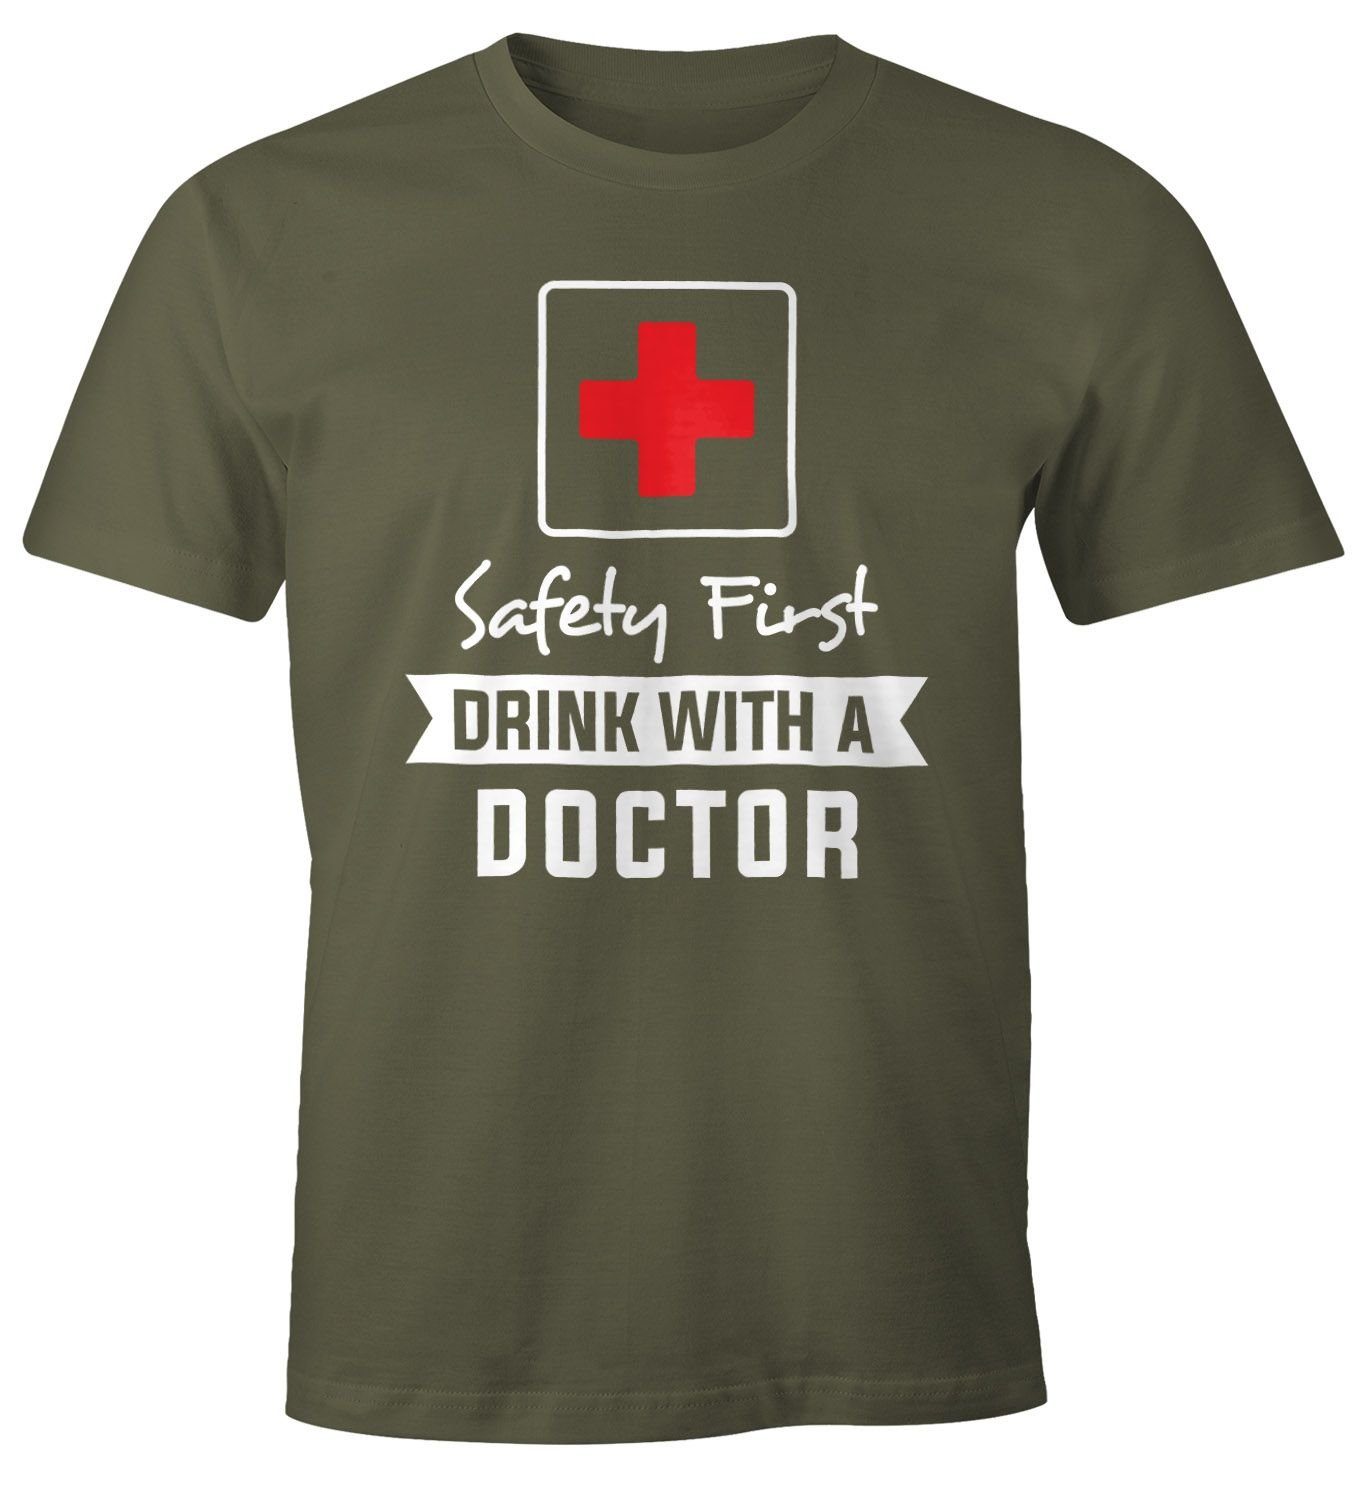 MoonWorks Print-Shirt Herren T-Shirt Safety First drink with a doctor Fun-Shirt Party-Shirt Moonworks® mit Print grün